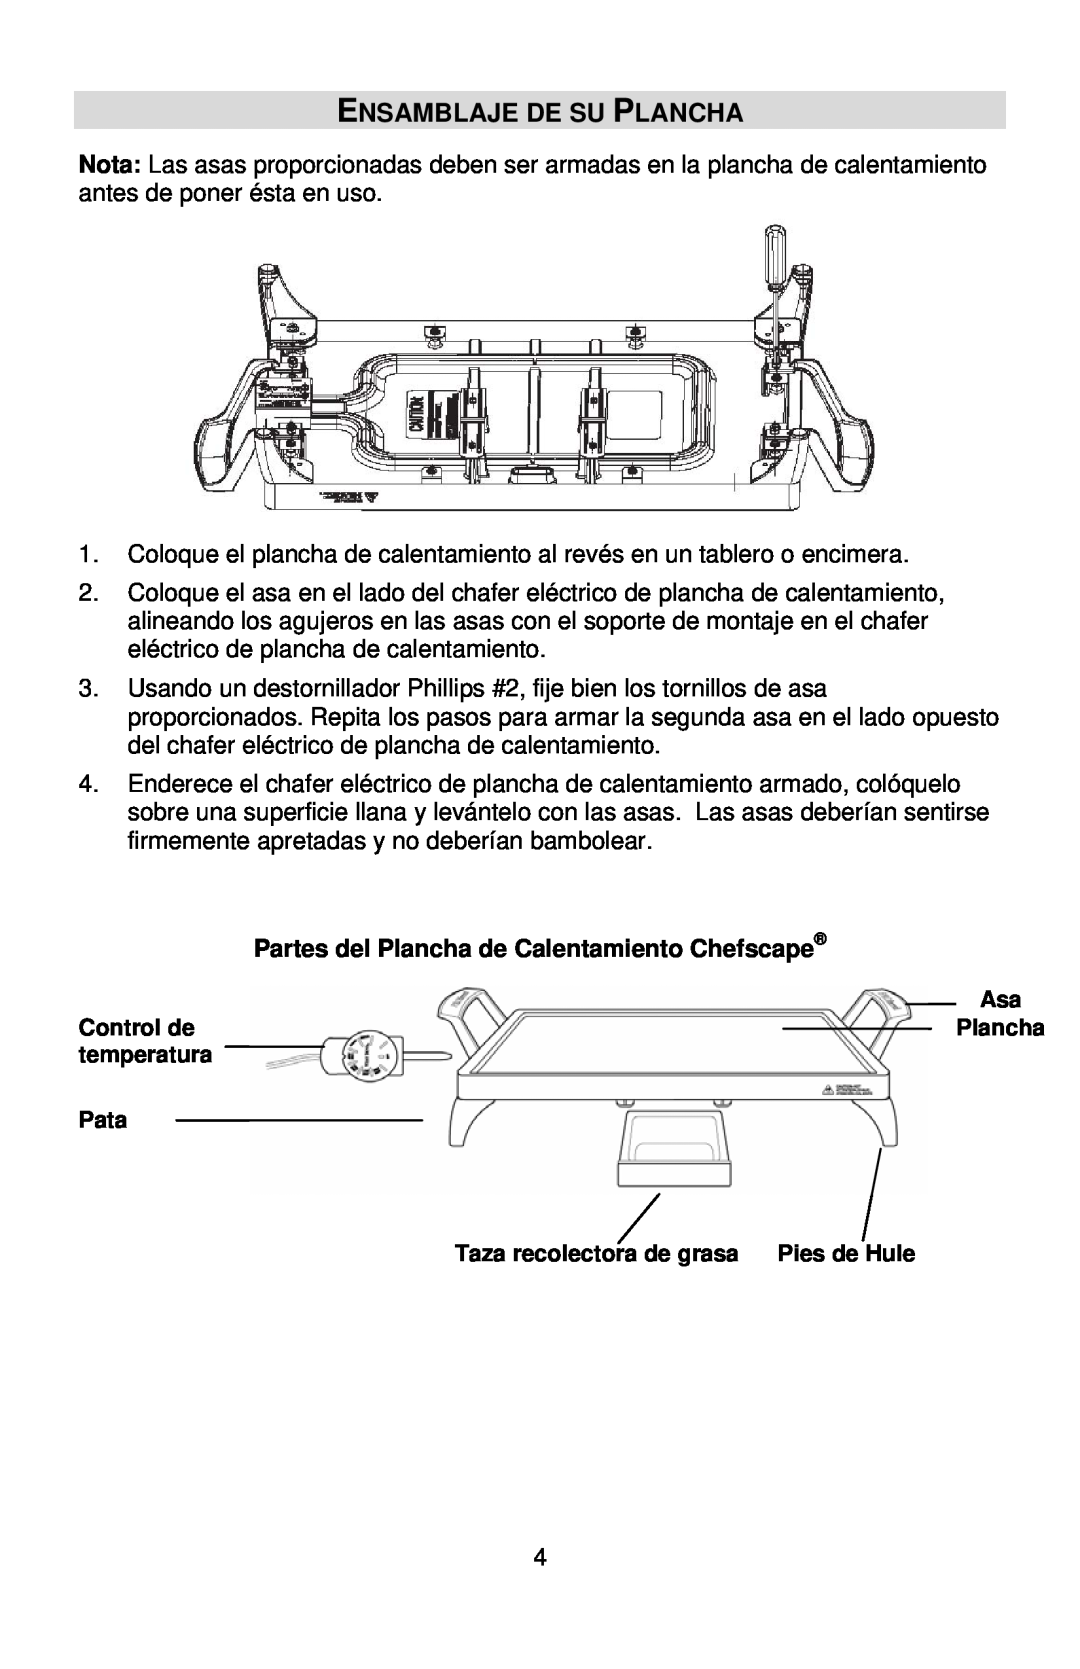 West Bend L5749A instruction manual Ensamblaje De Su Plancha, Partes del Plancha de Calentamiento Chefscape 